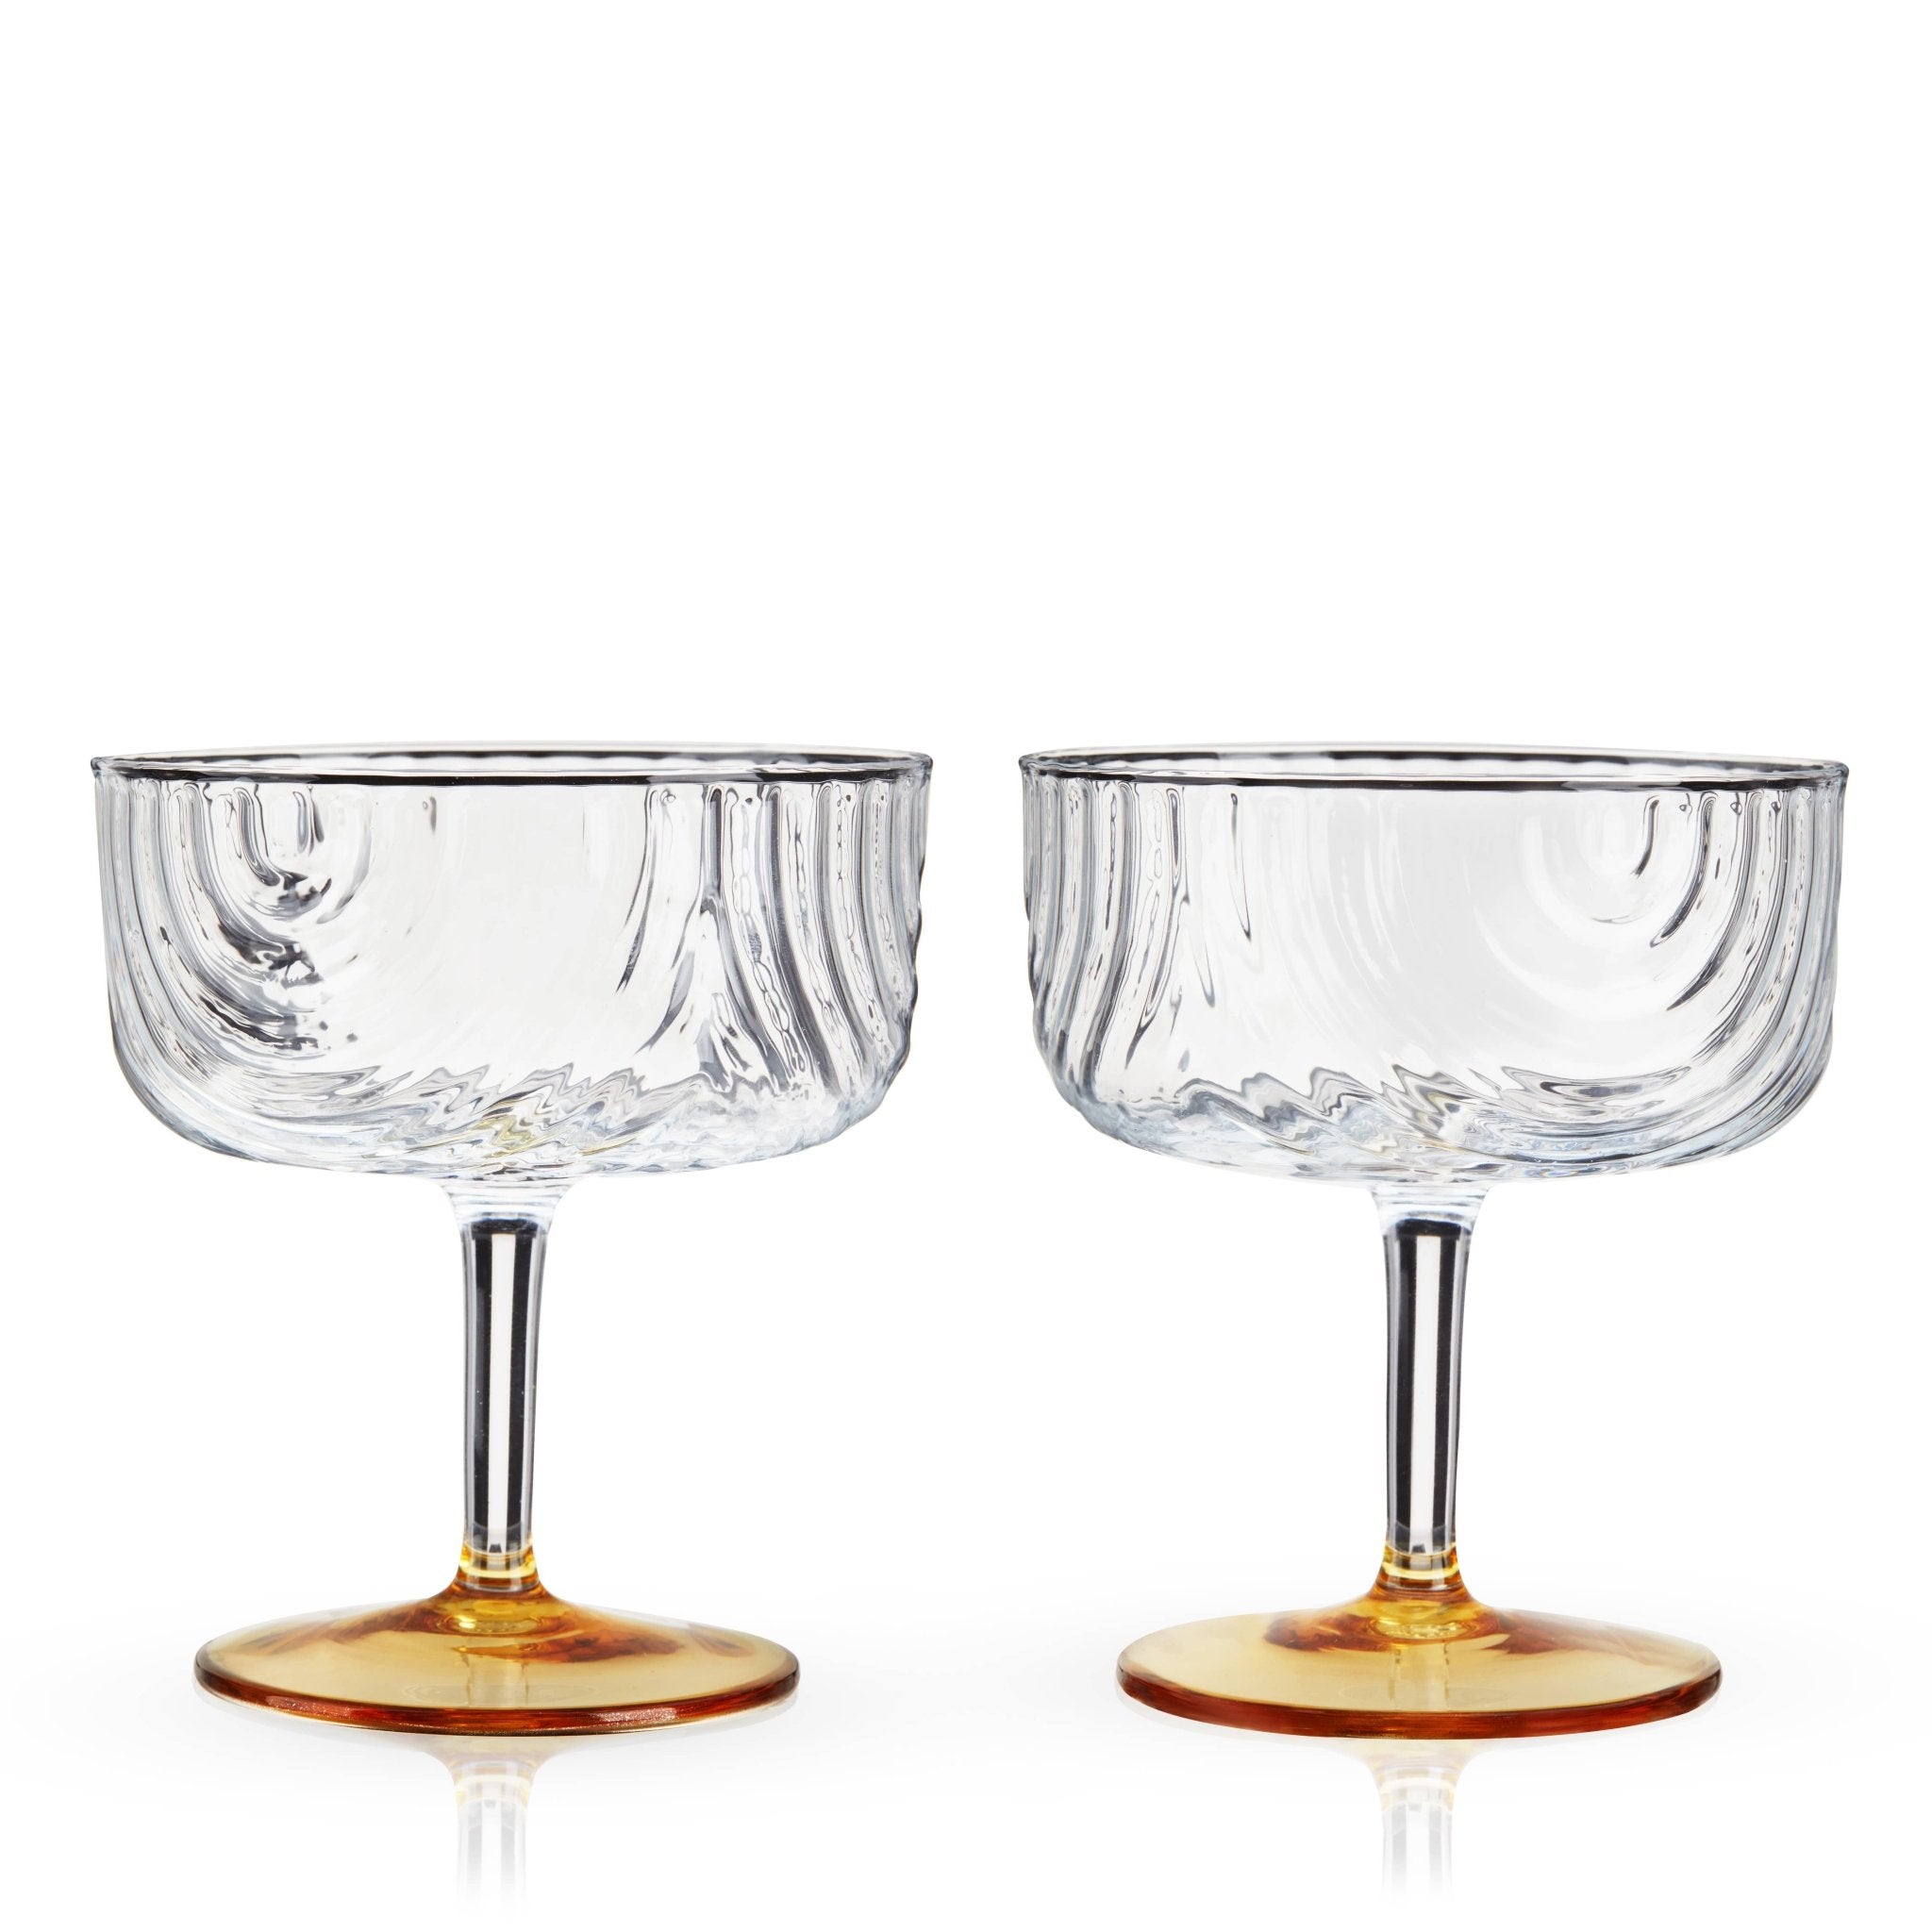 Gatsby Coupes (set of 2) - Durham DistilleryCocktail GlasswareShop for Pickup